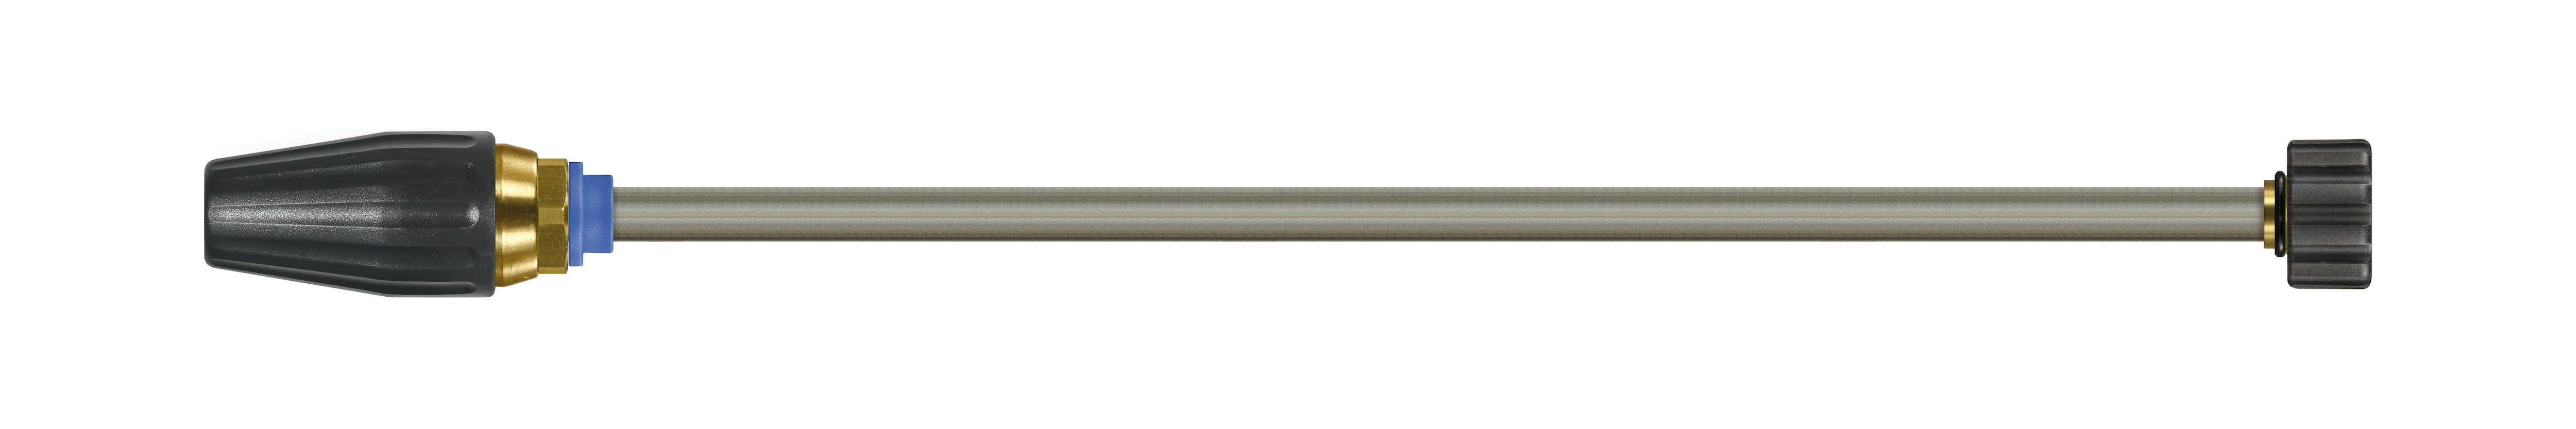 Rotabuse céramique avec lance 430mm, 100-250 bar, Calibre 060.